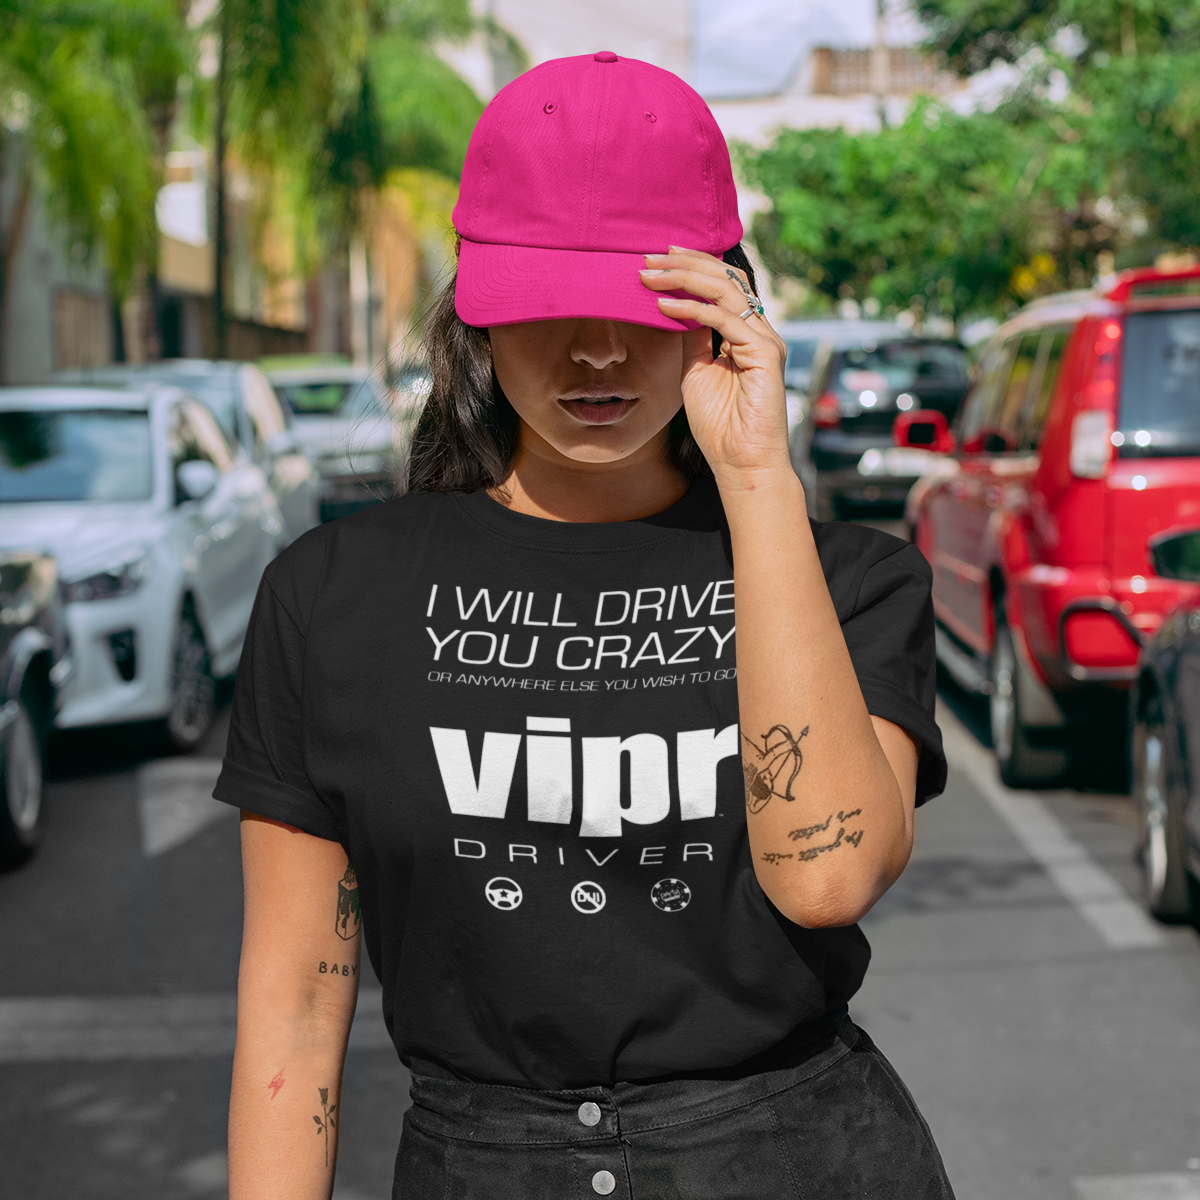 Official VIPR Driver T-Shirt - I'll Drive You Crazy...